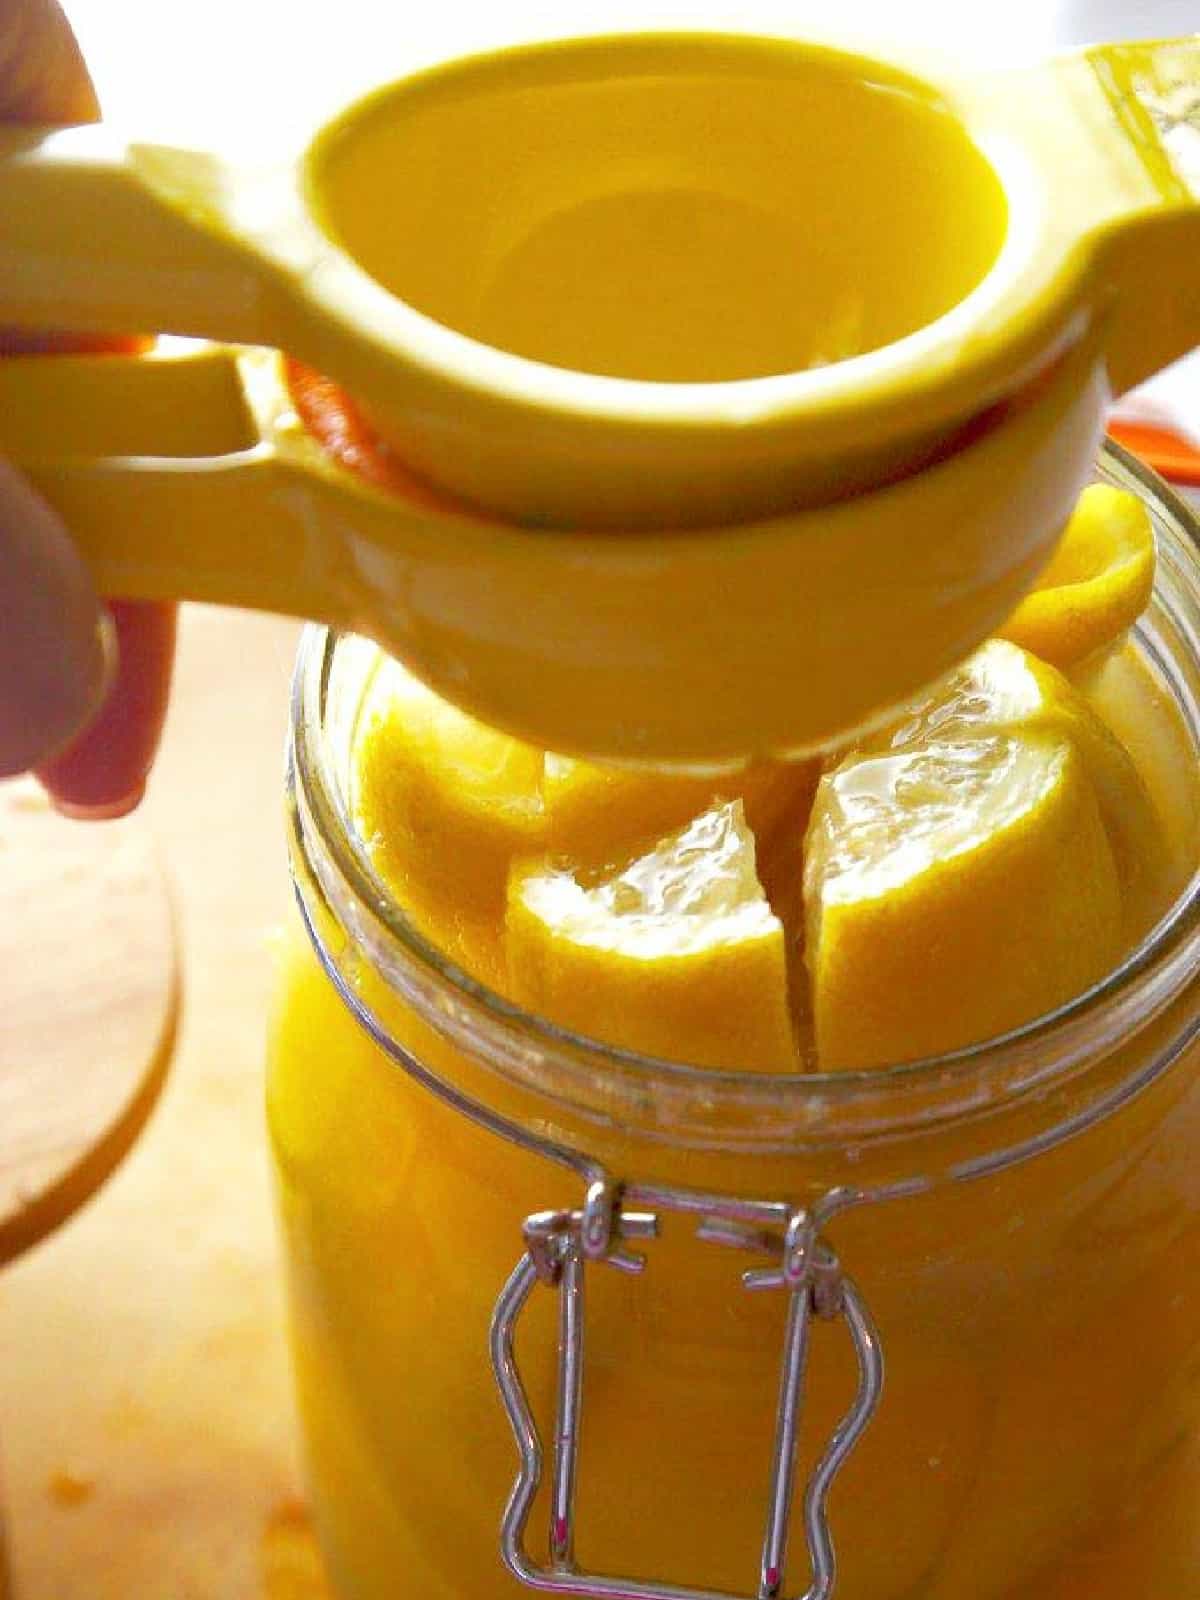 Using a lemon juicer to add lemon juice into the clamp jar. 